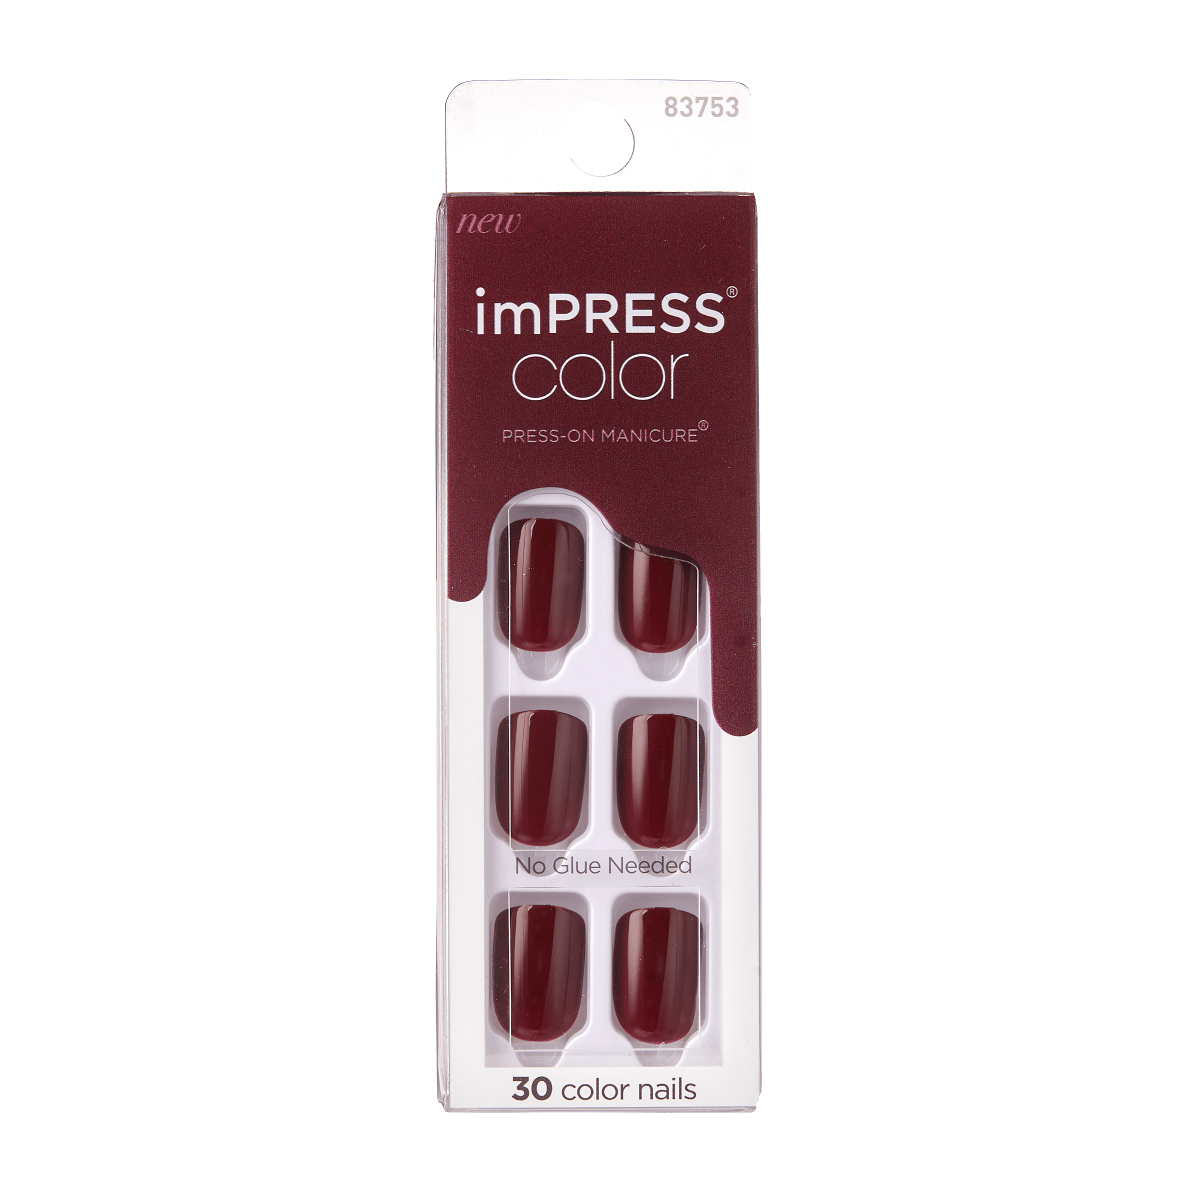 imPRESS Color Press-On Manicure -  I&